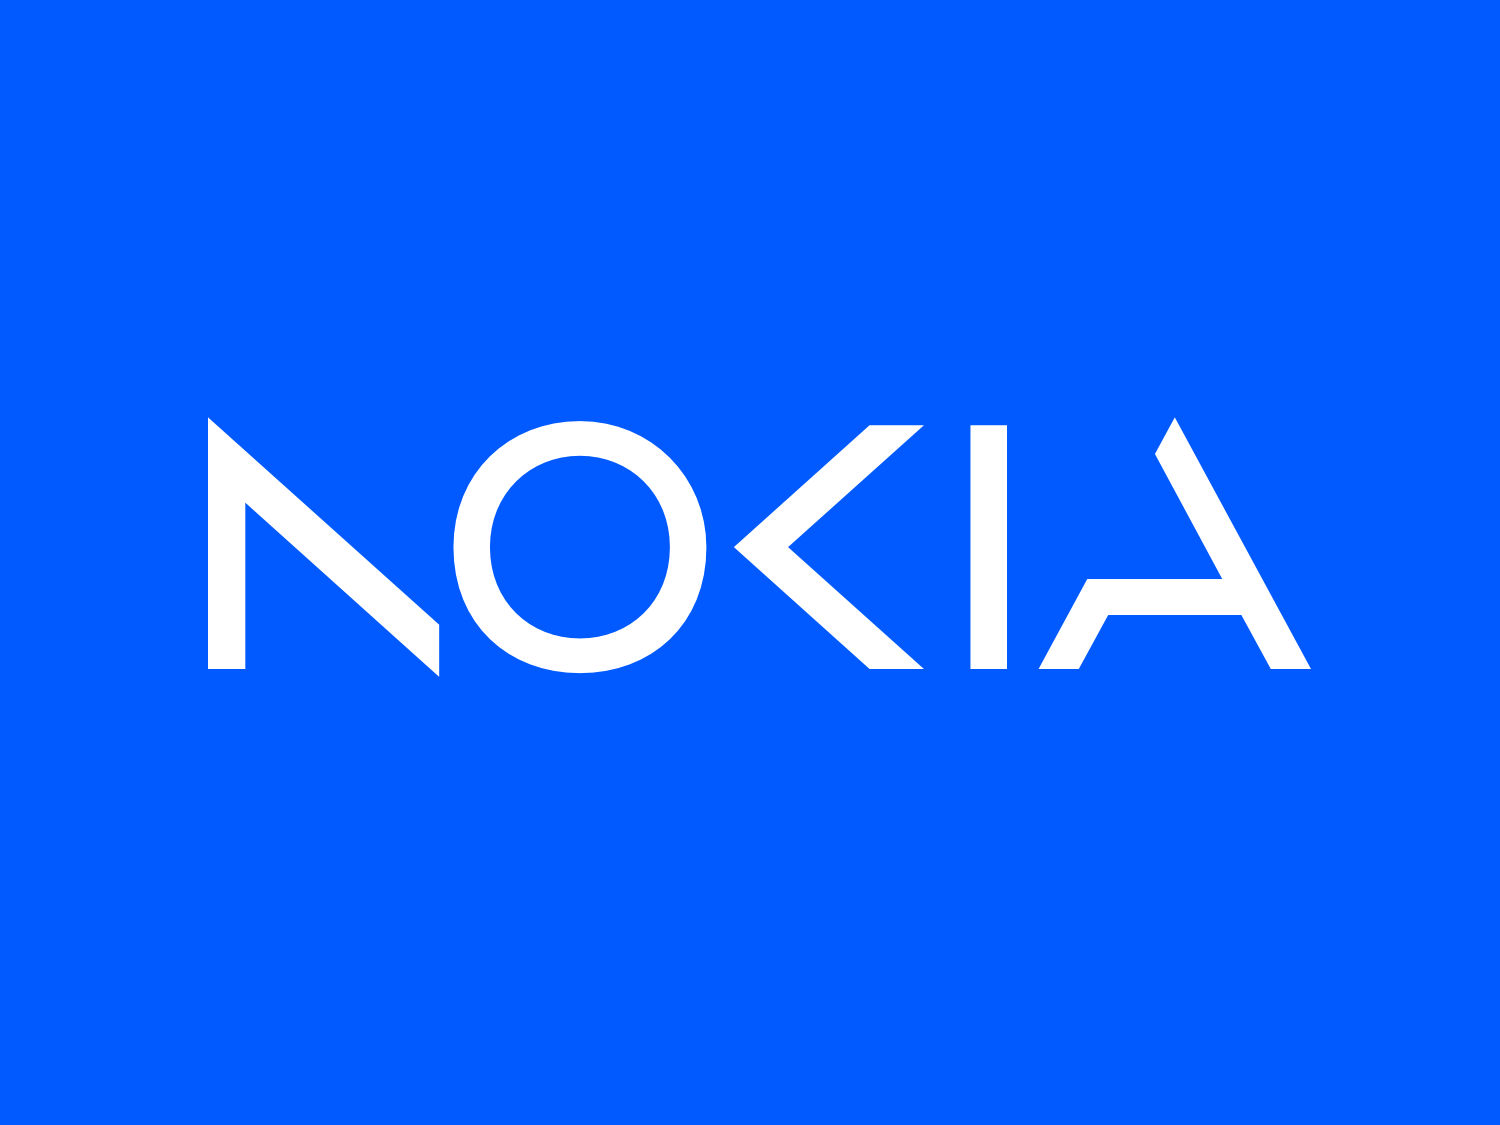 Nueva marca para Nokia – Design Diary